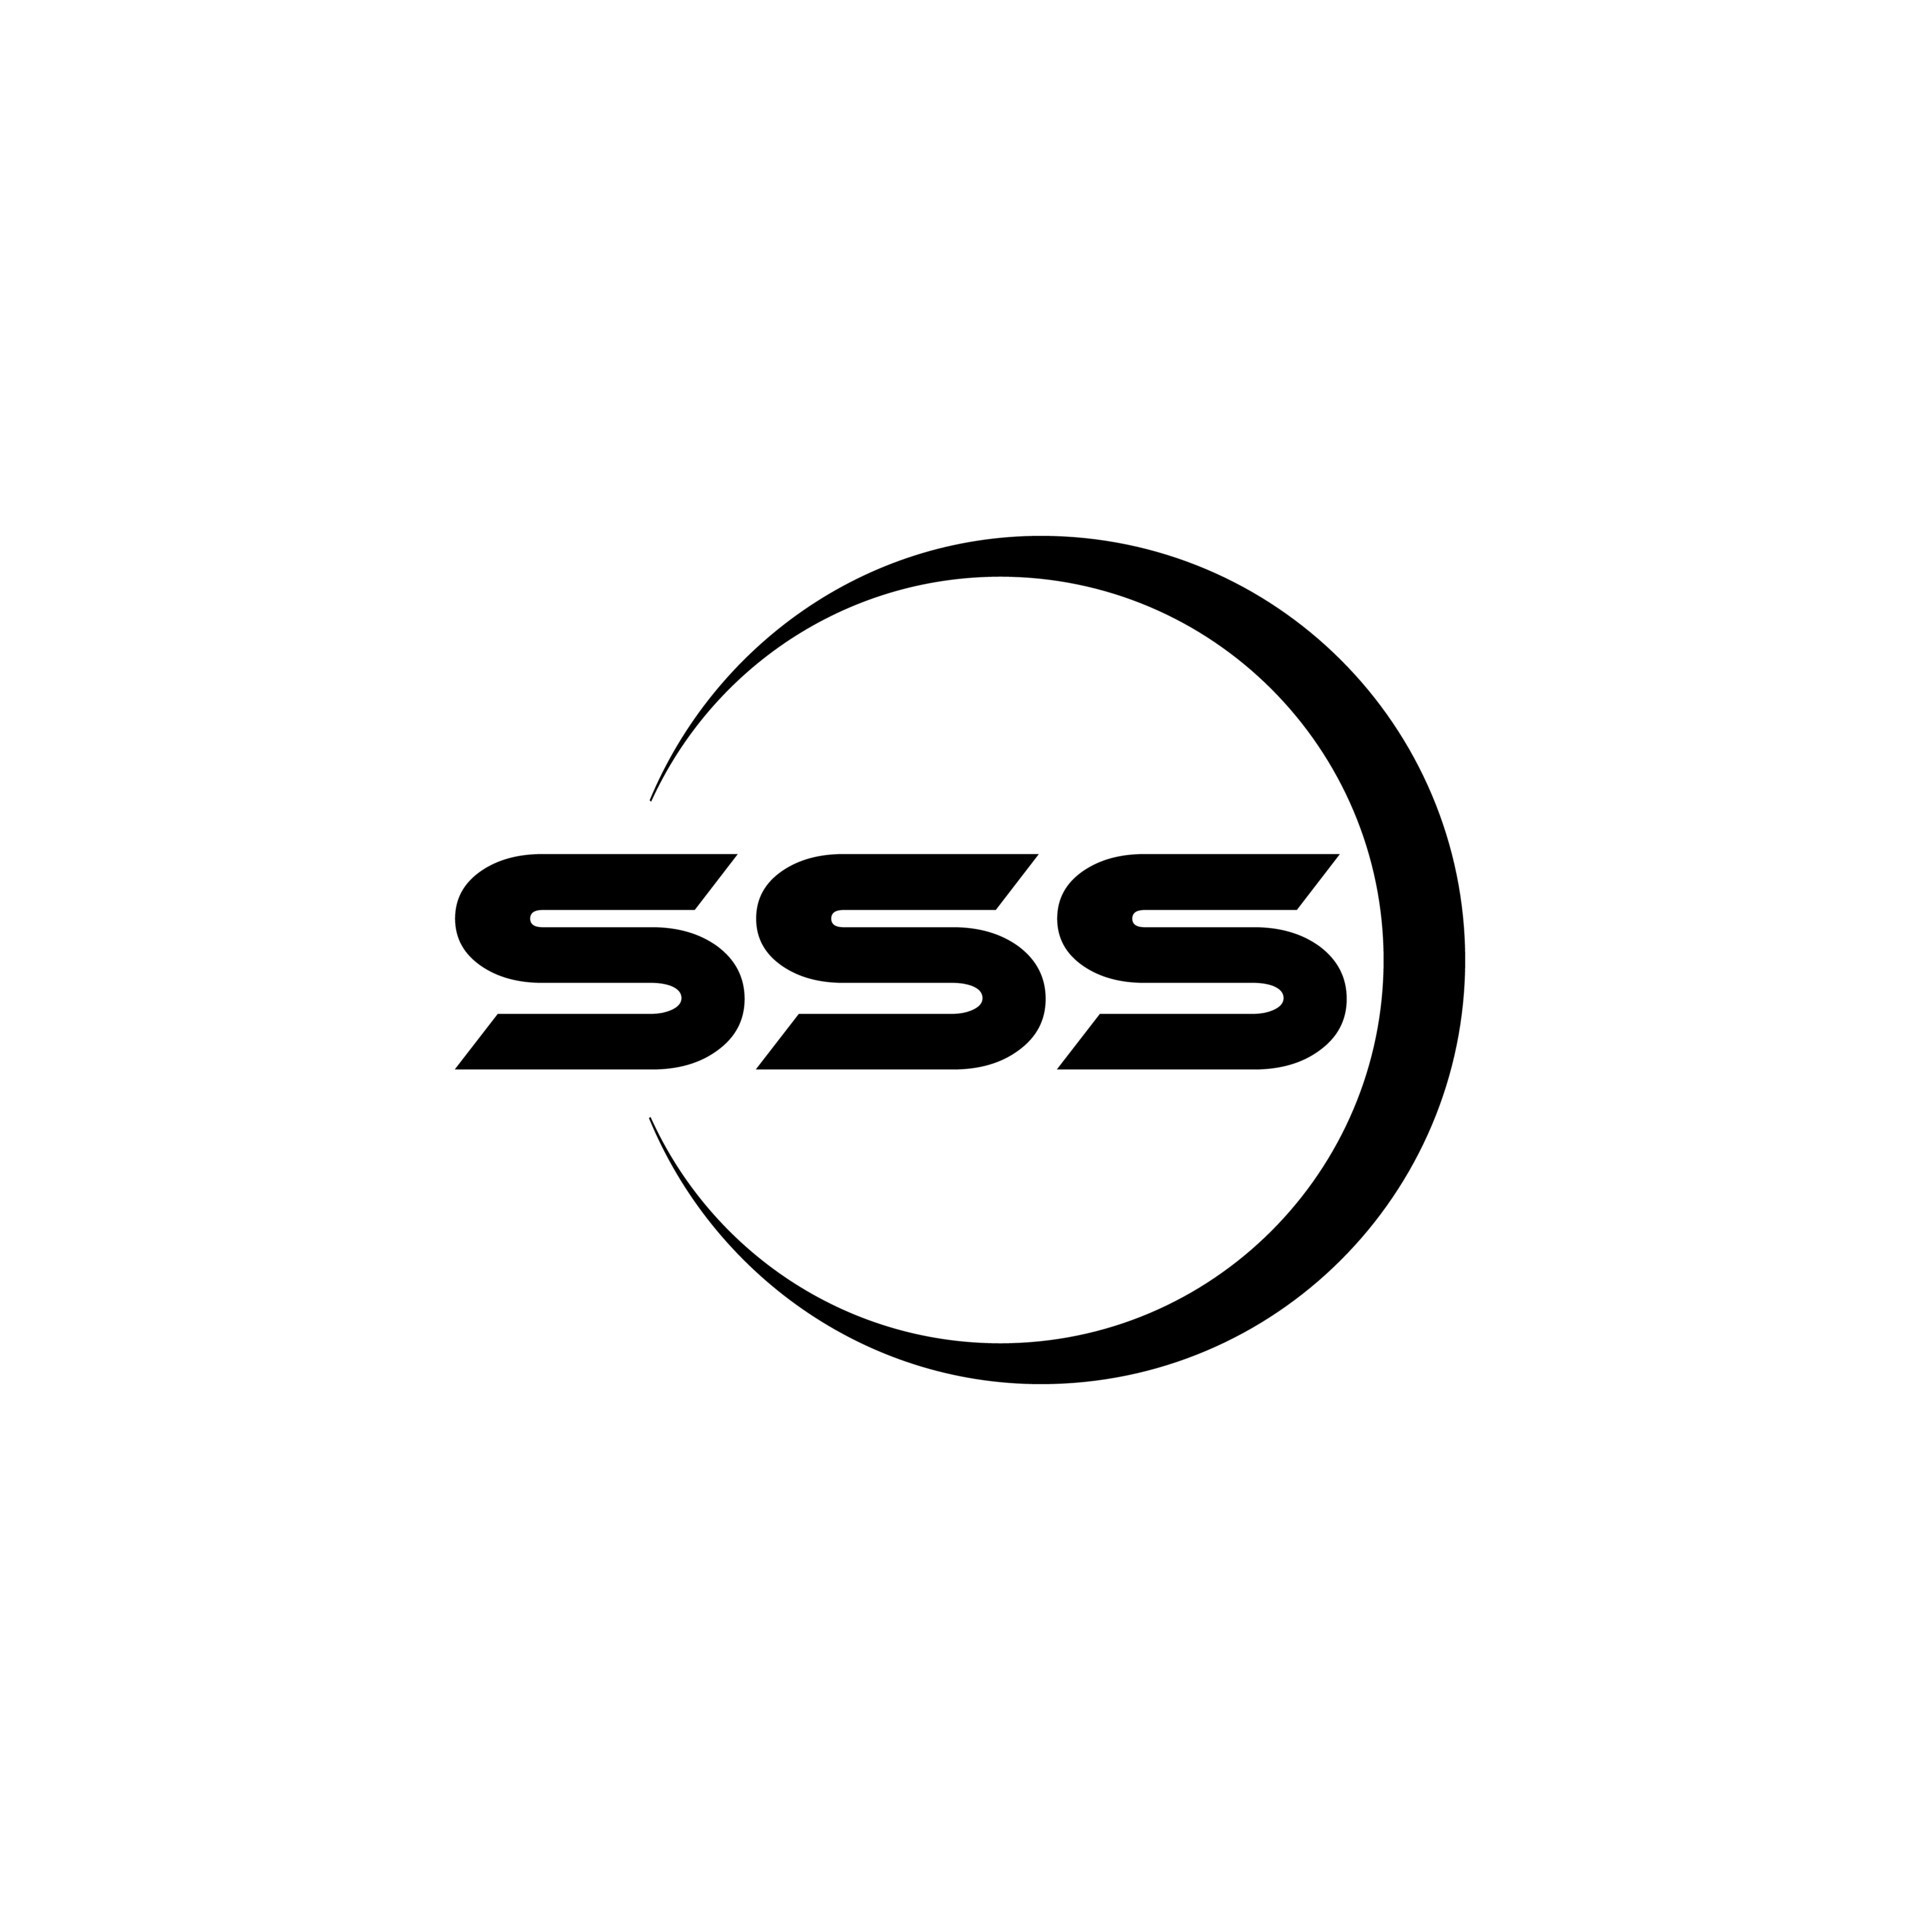 Details more than 77 sss logo design best - ceg.edu.vn